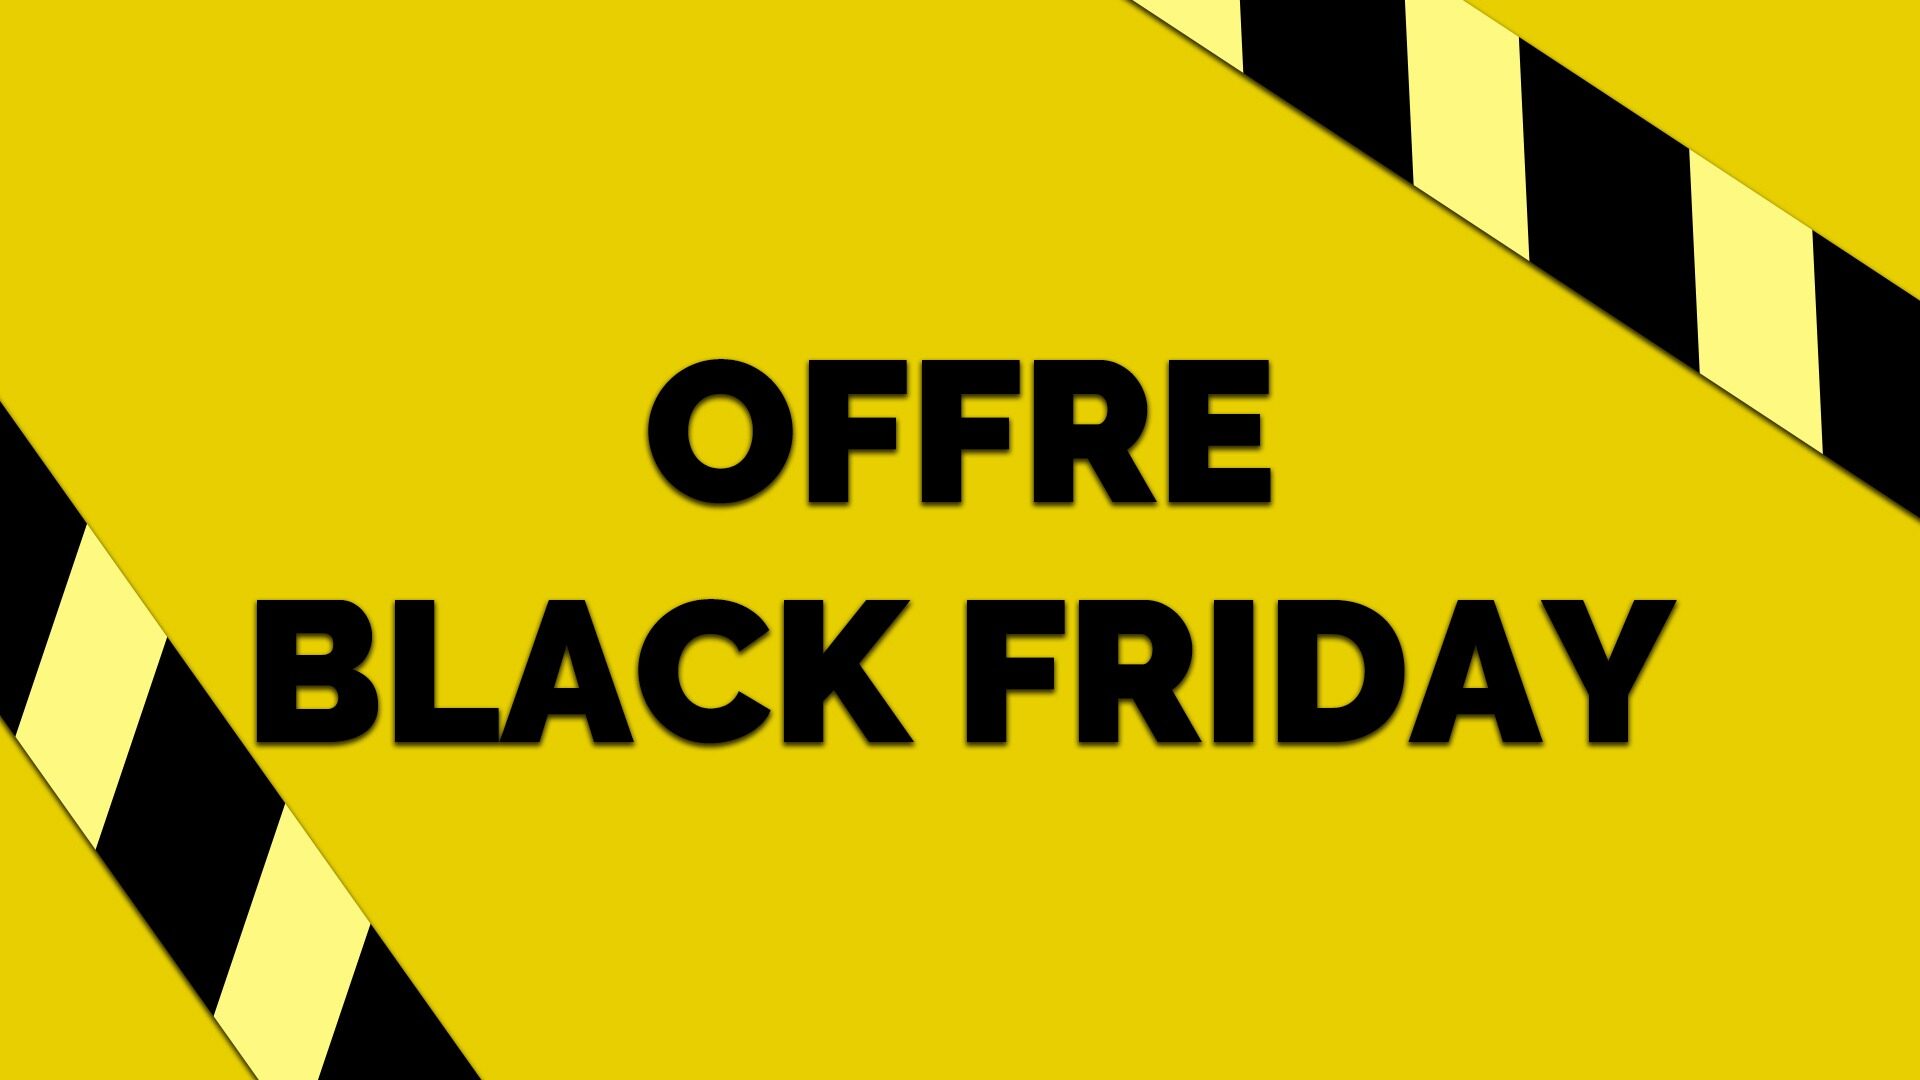 Offre Black Friday